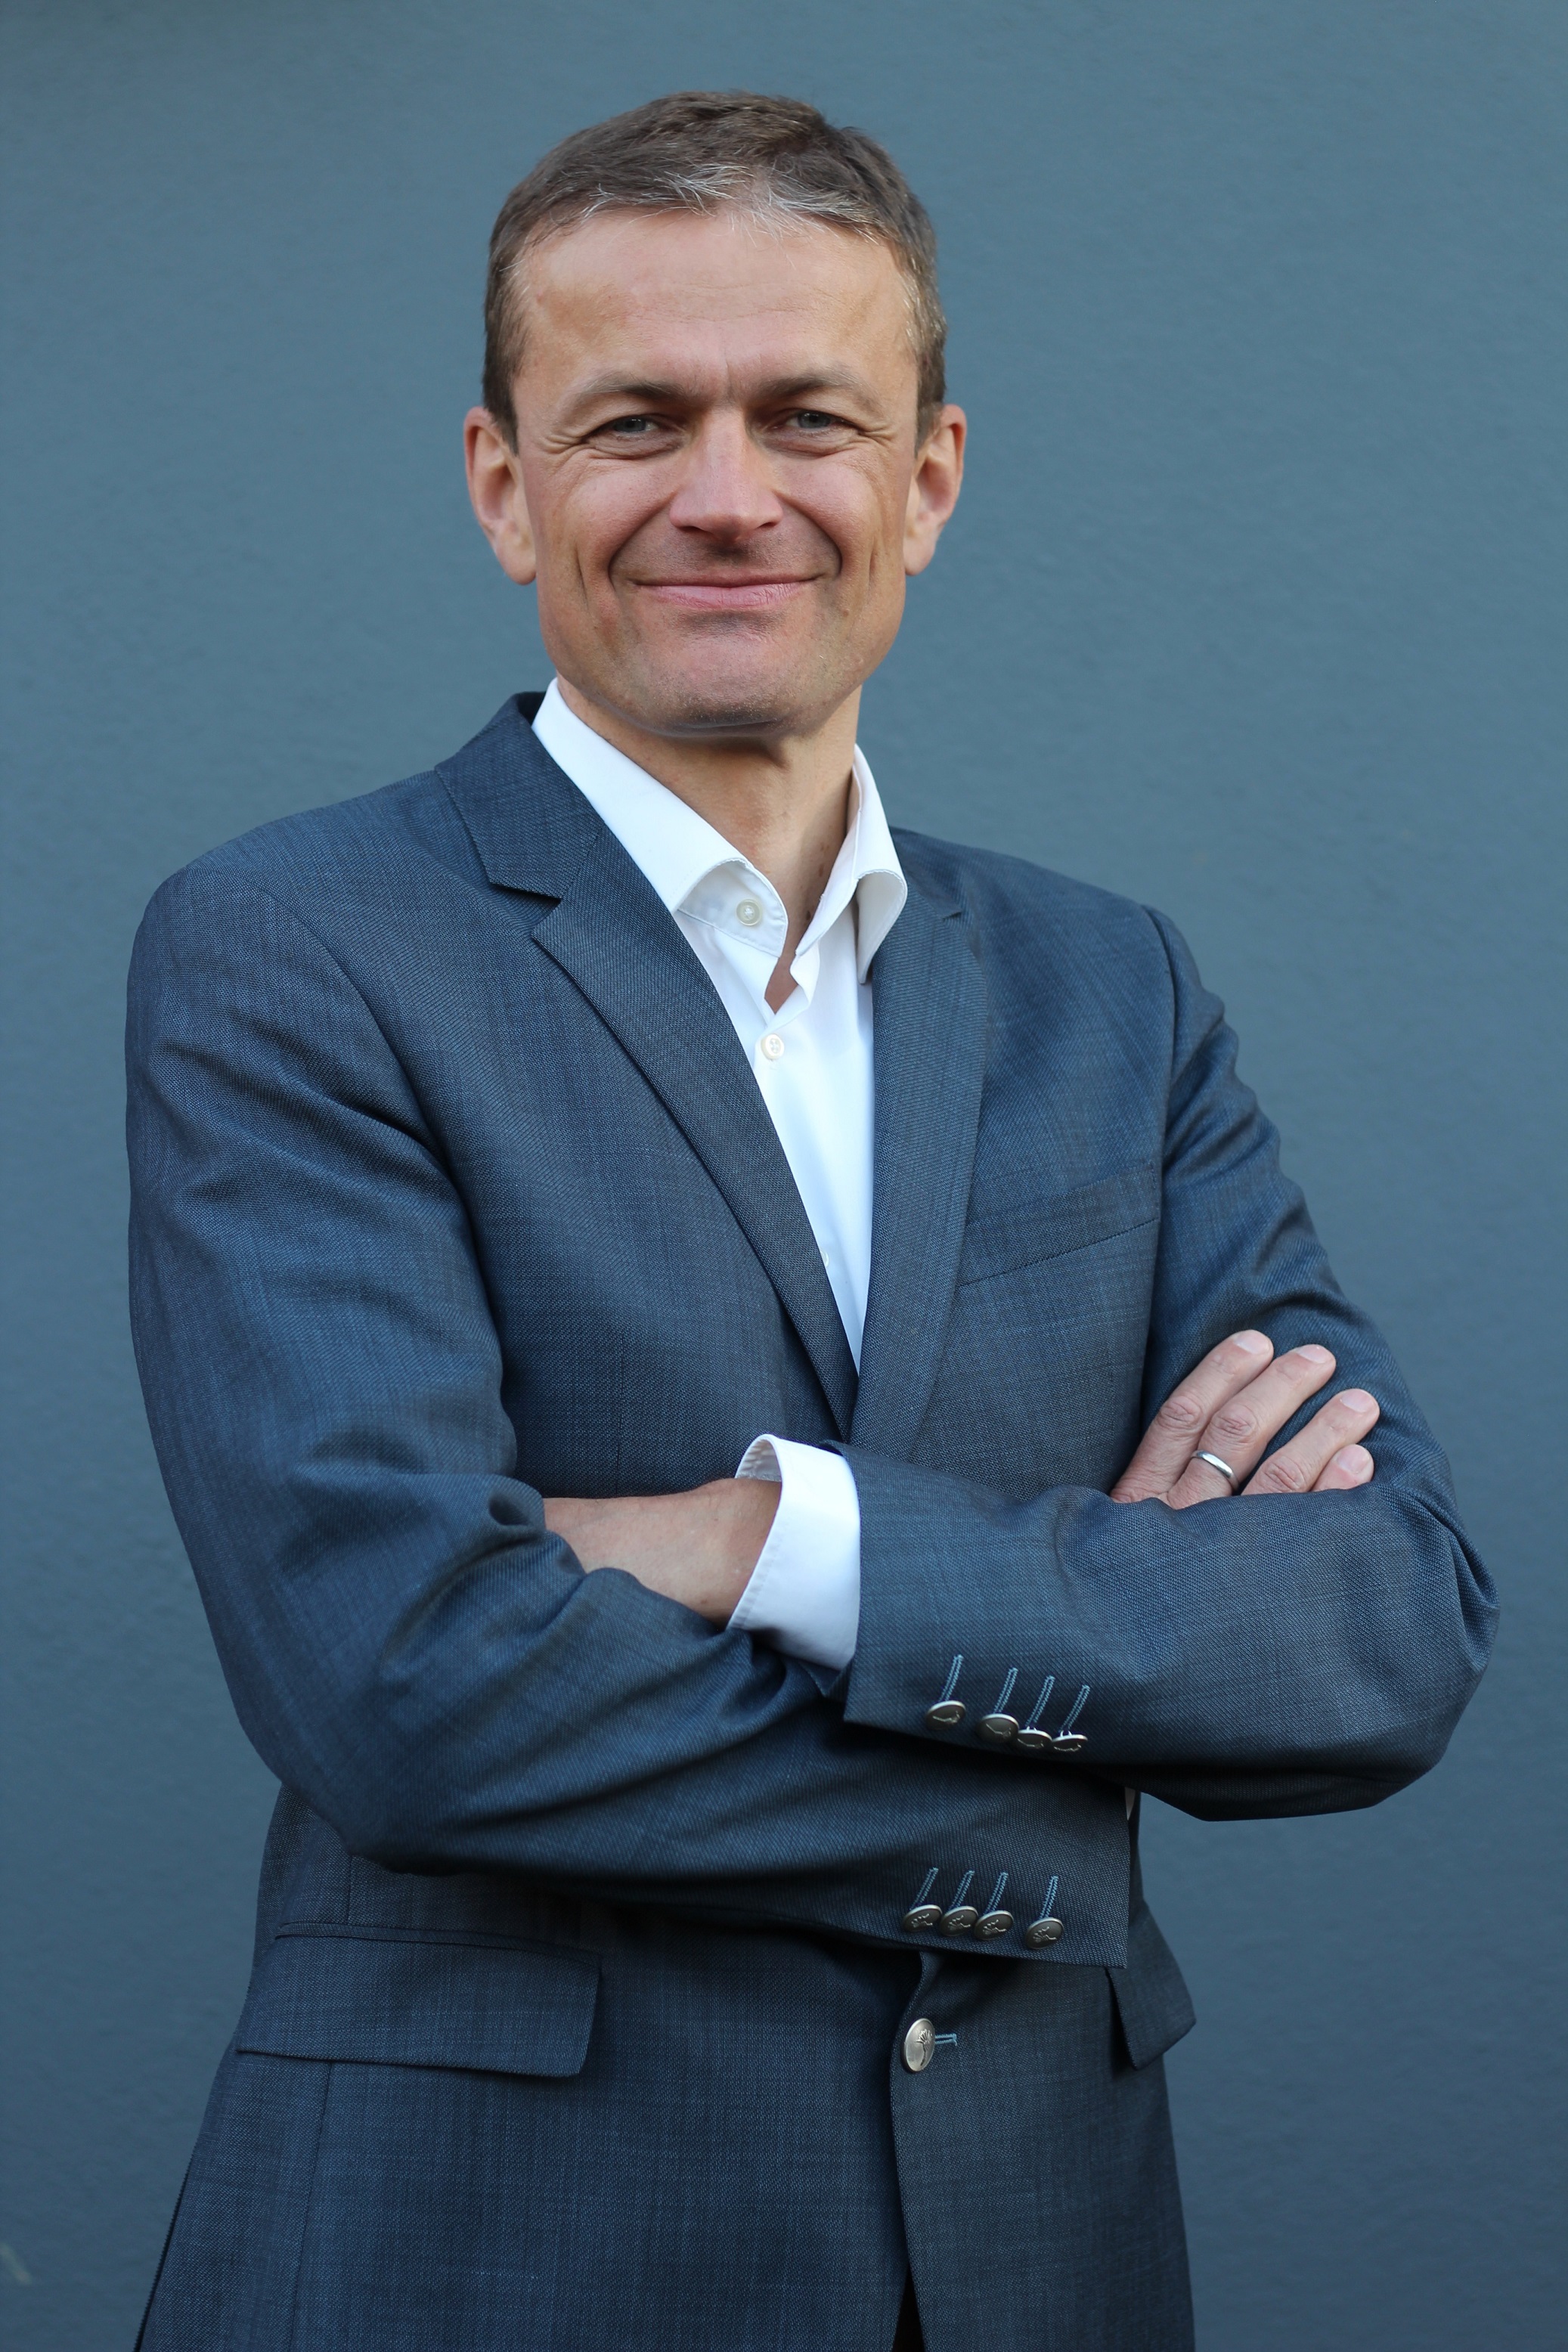 Prof. Dr. Jens Maschmann, Ärztlicher Direktor des Universitätsklinikums Würzburg, wechselt zum August an das Universitätsklinikum Tübingen.